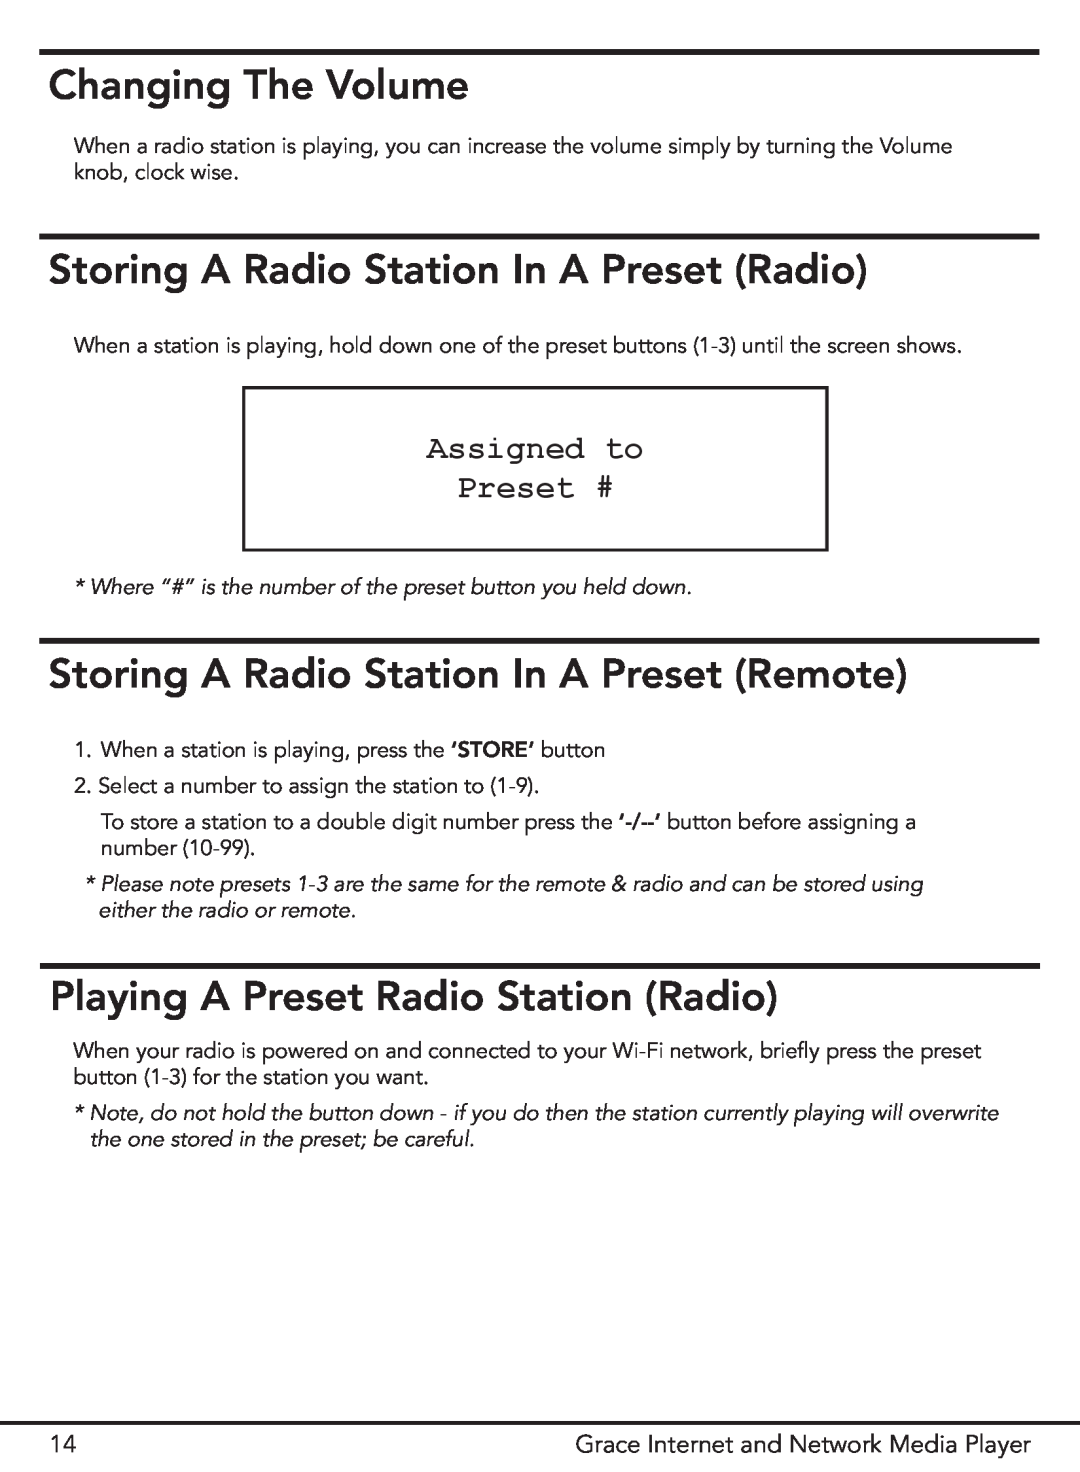 Grace GDI-IR3000 Changing The Volume, Storing A Radio Station In A Preset Radio, Playing A Preset Radio Station Radio 